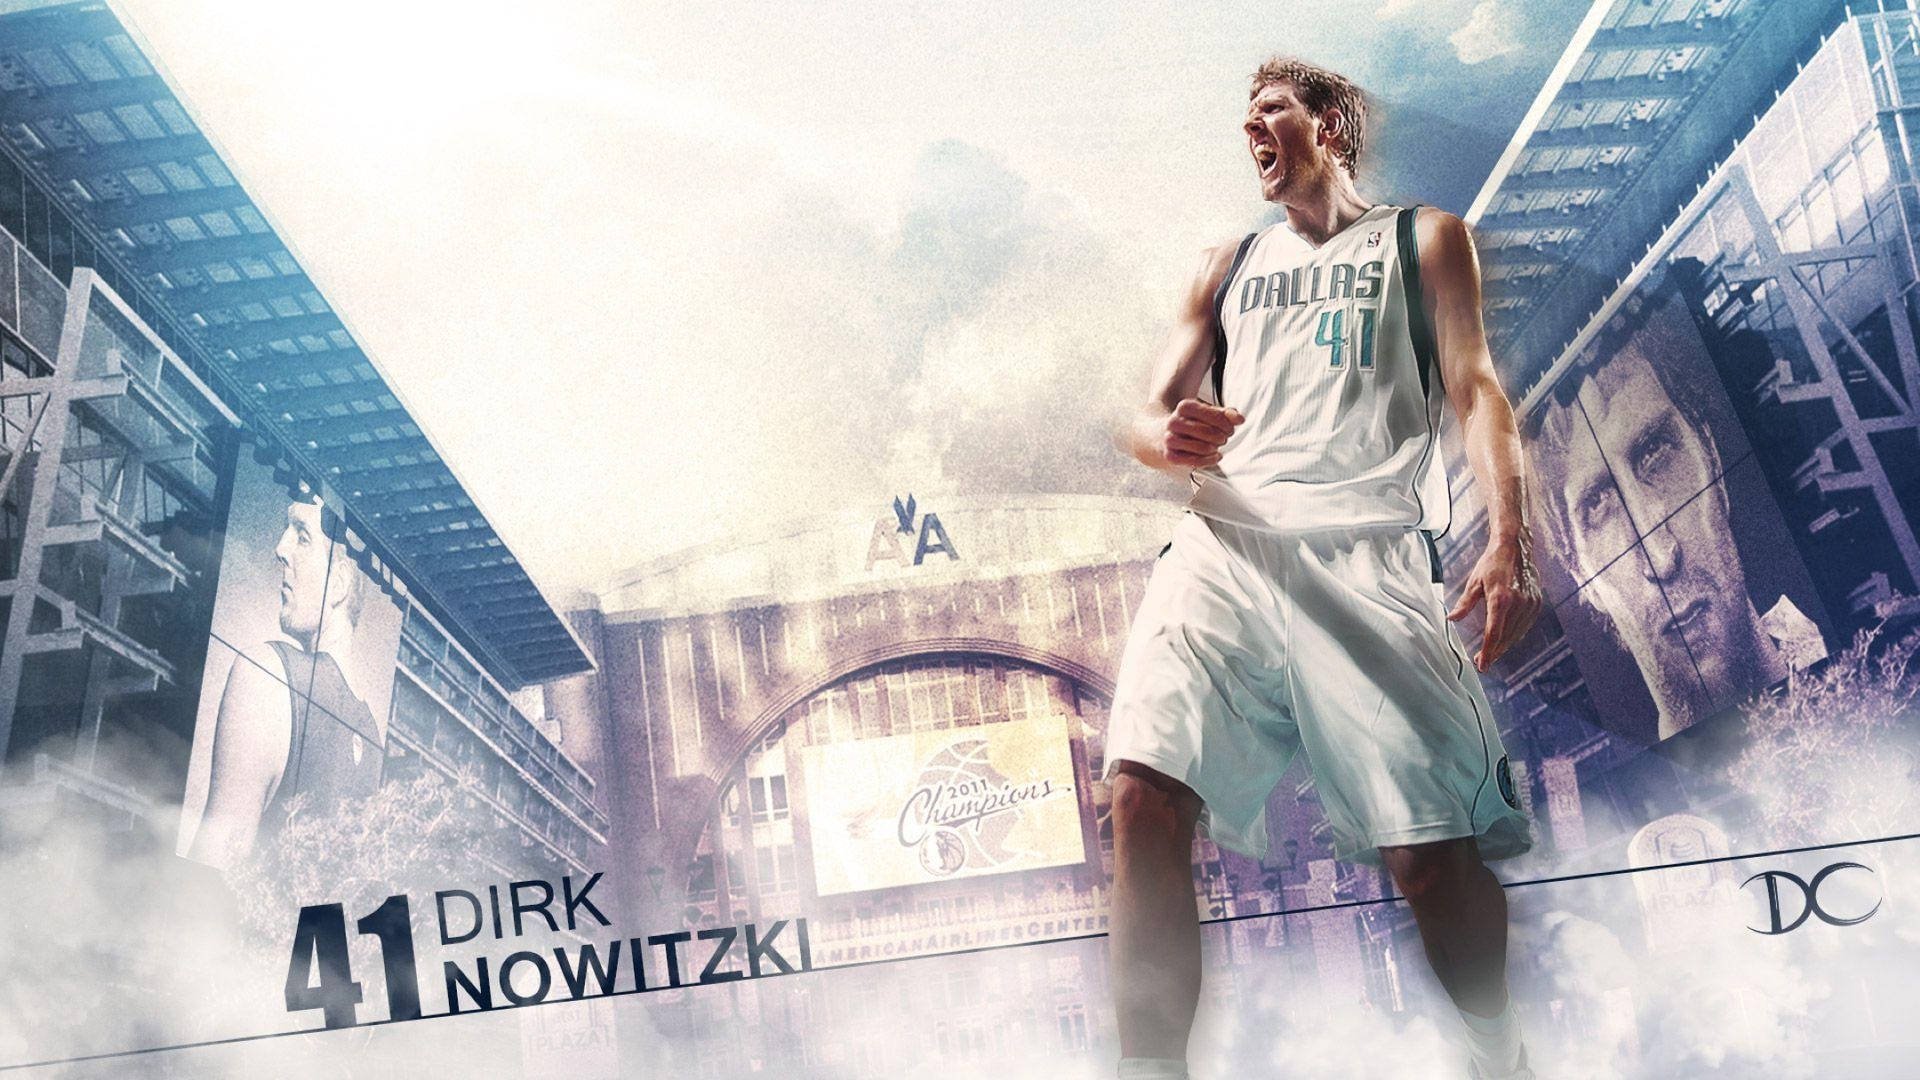 2011nba-champion Dirk Nowitzki. Wallpaper